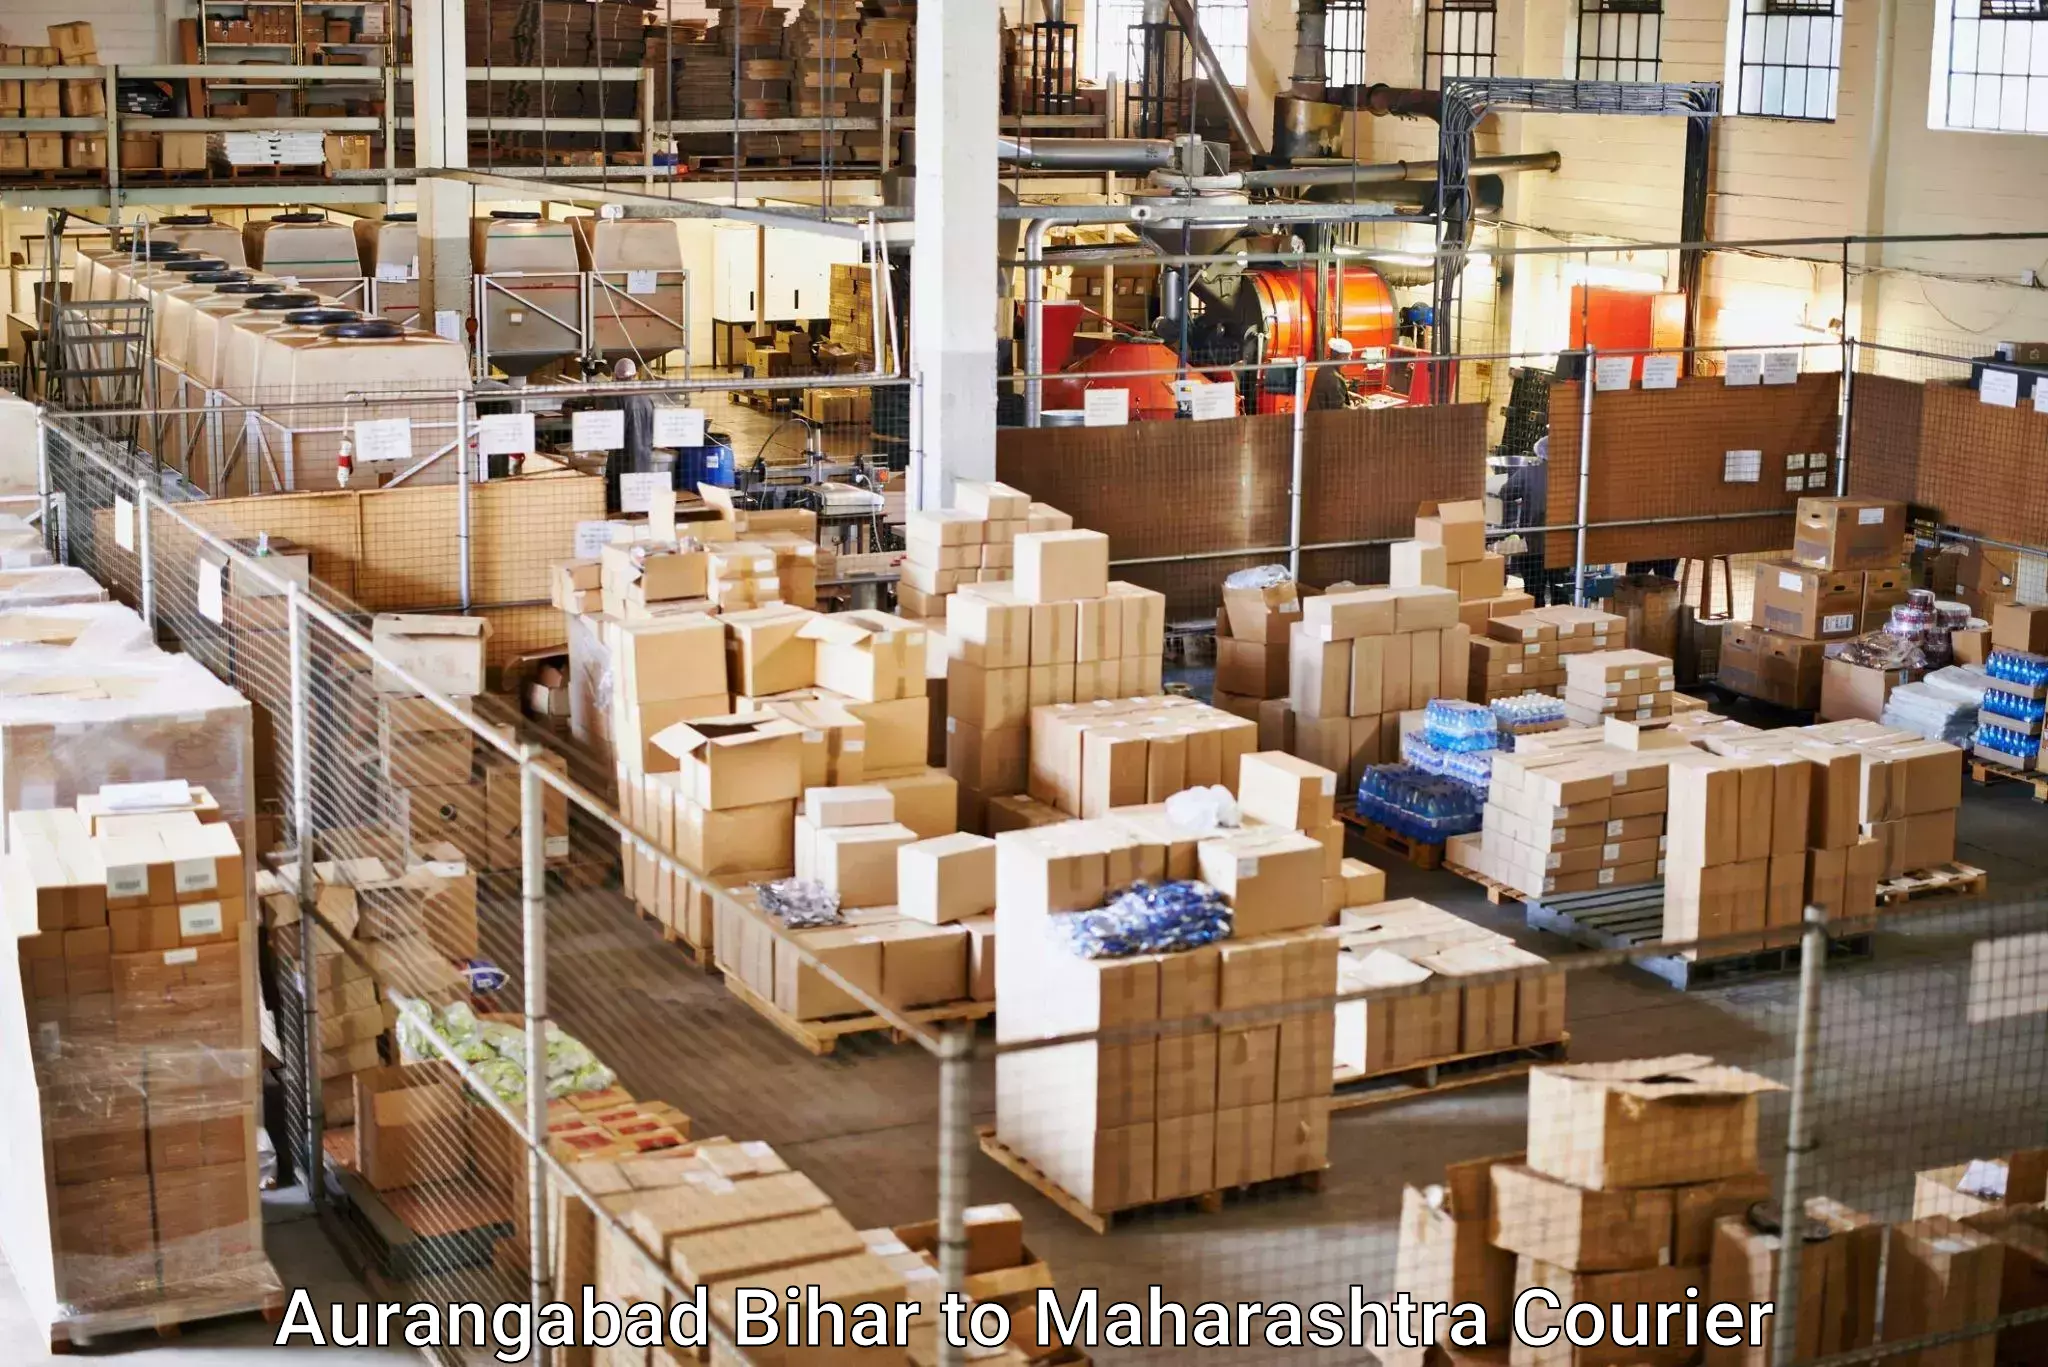 Efficient freight service Aurangabad Bihar to Maharashtra